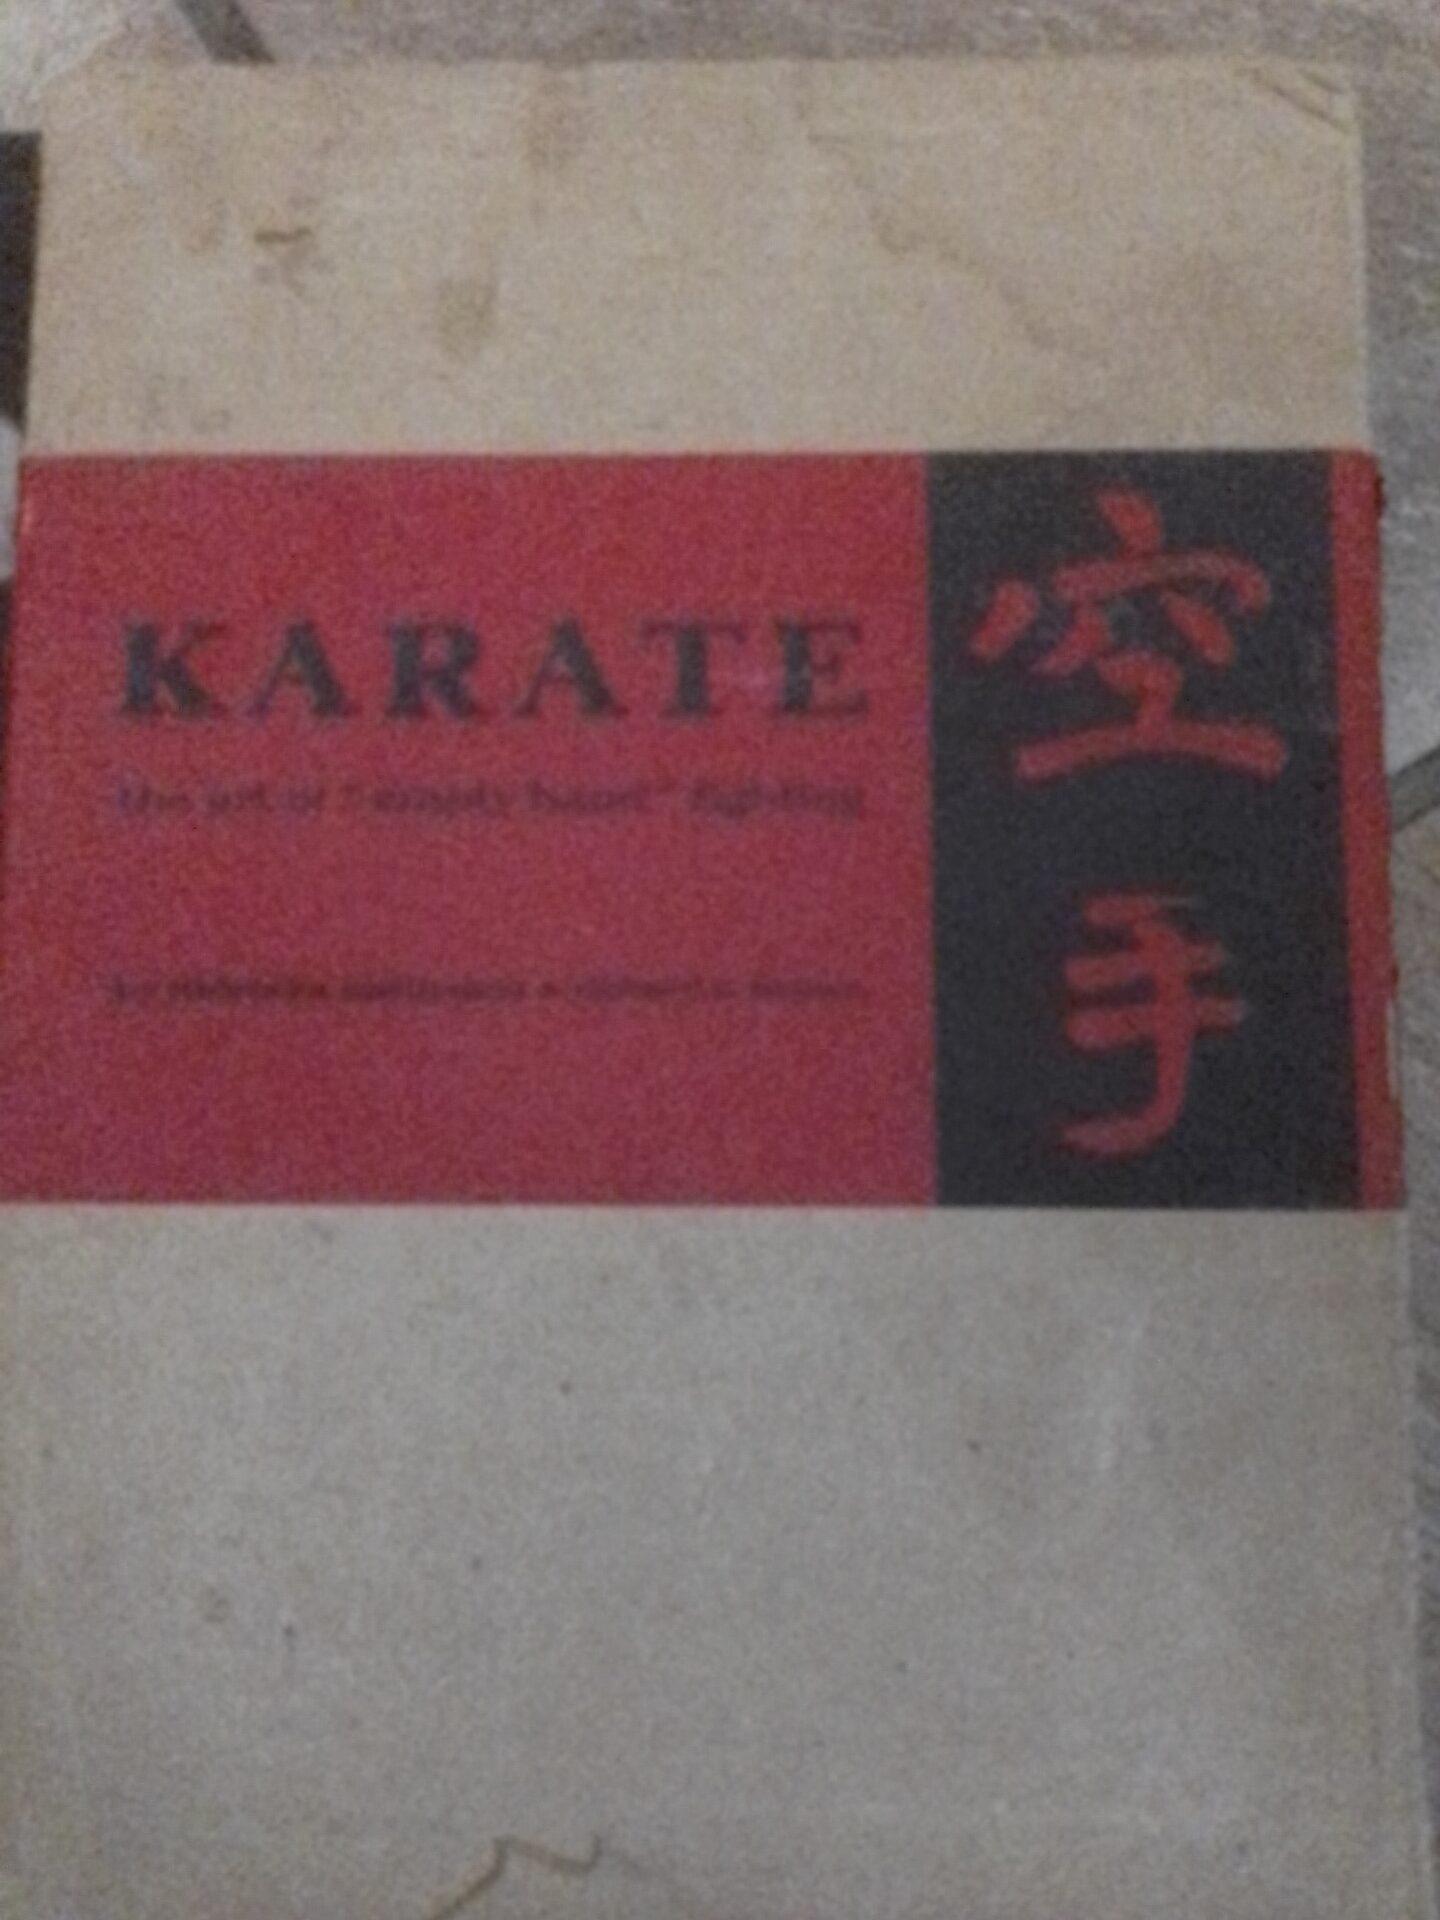 Karate – The art of empty hand fighting